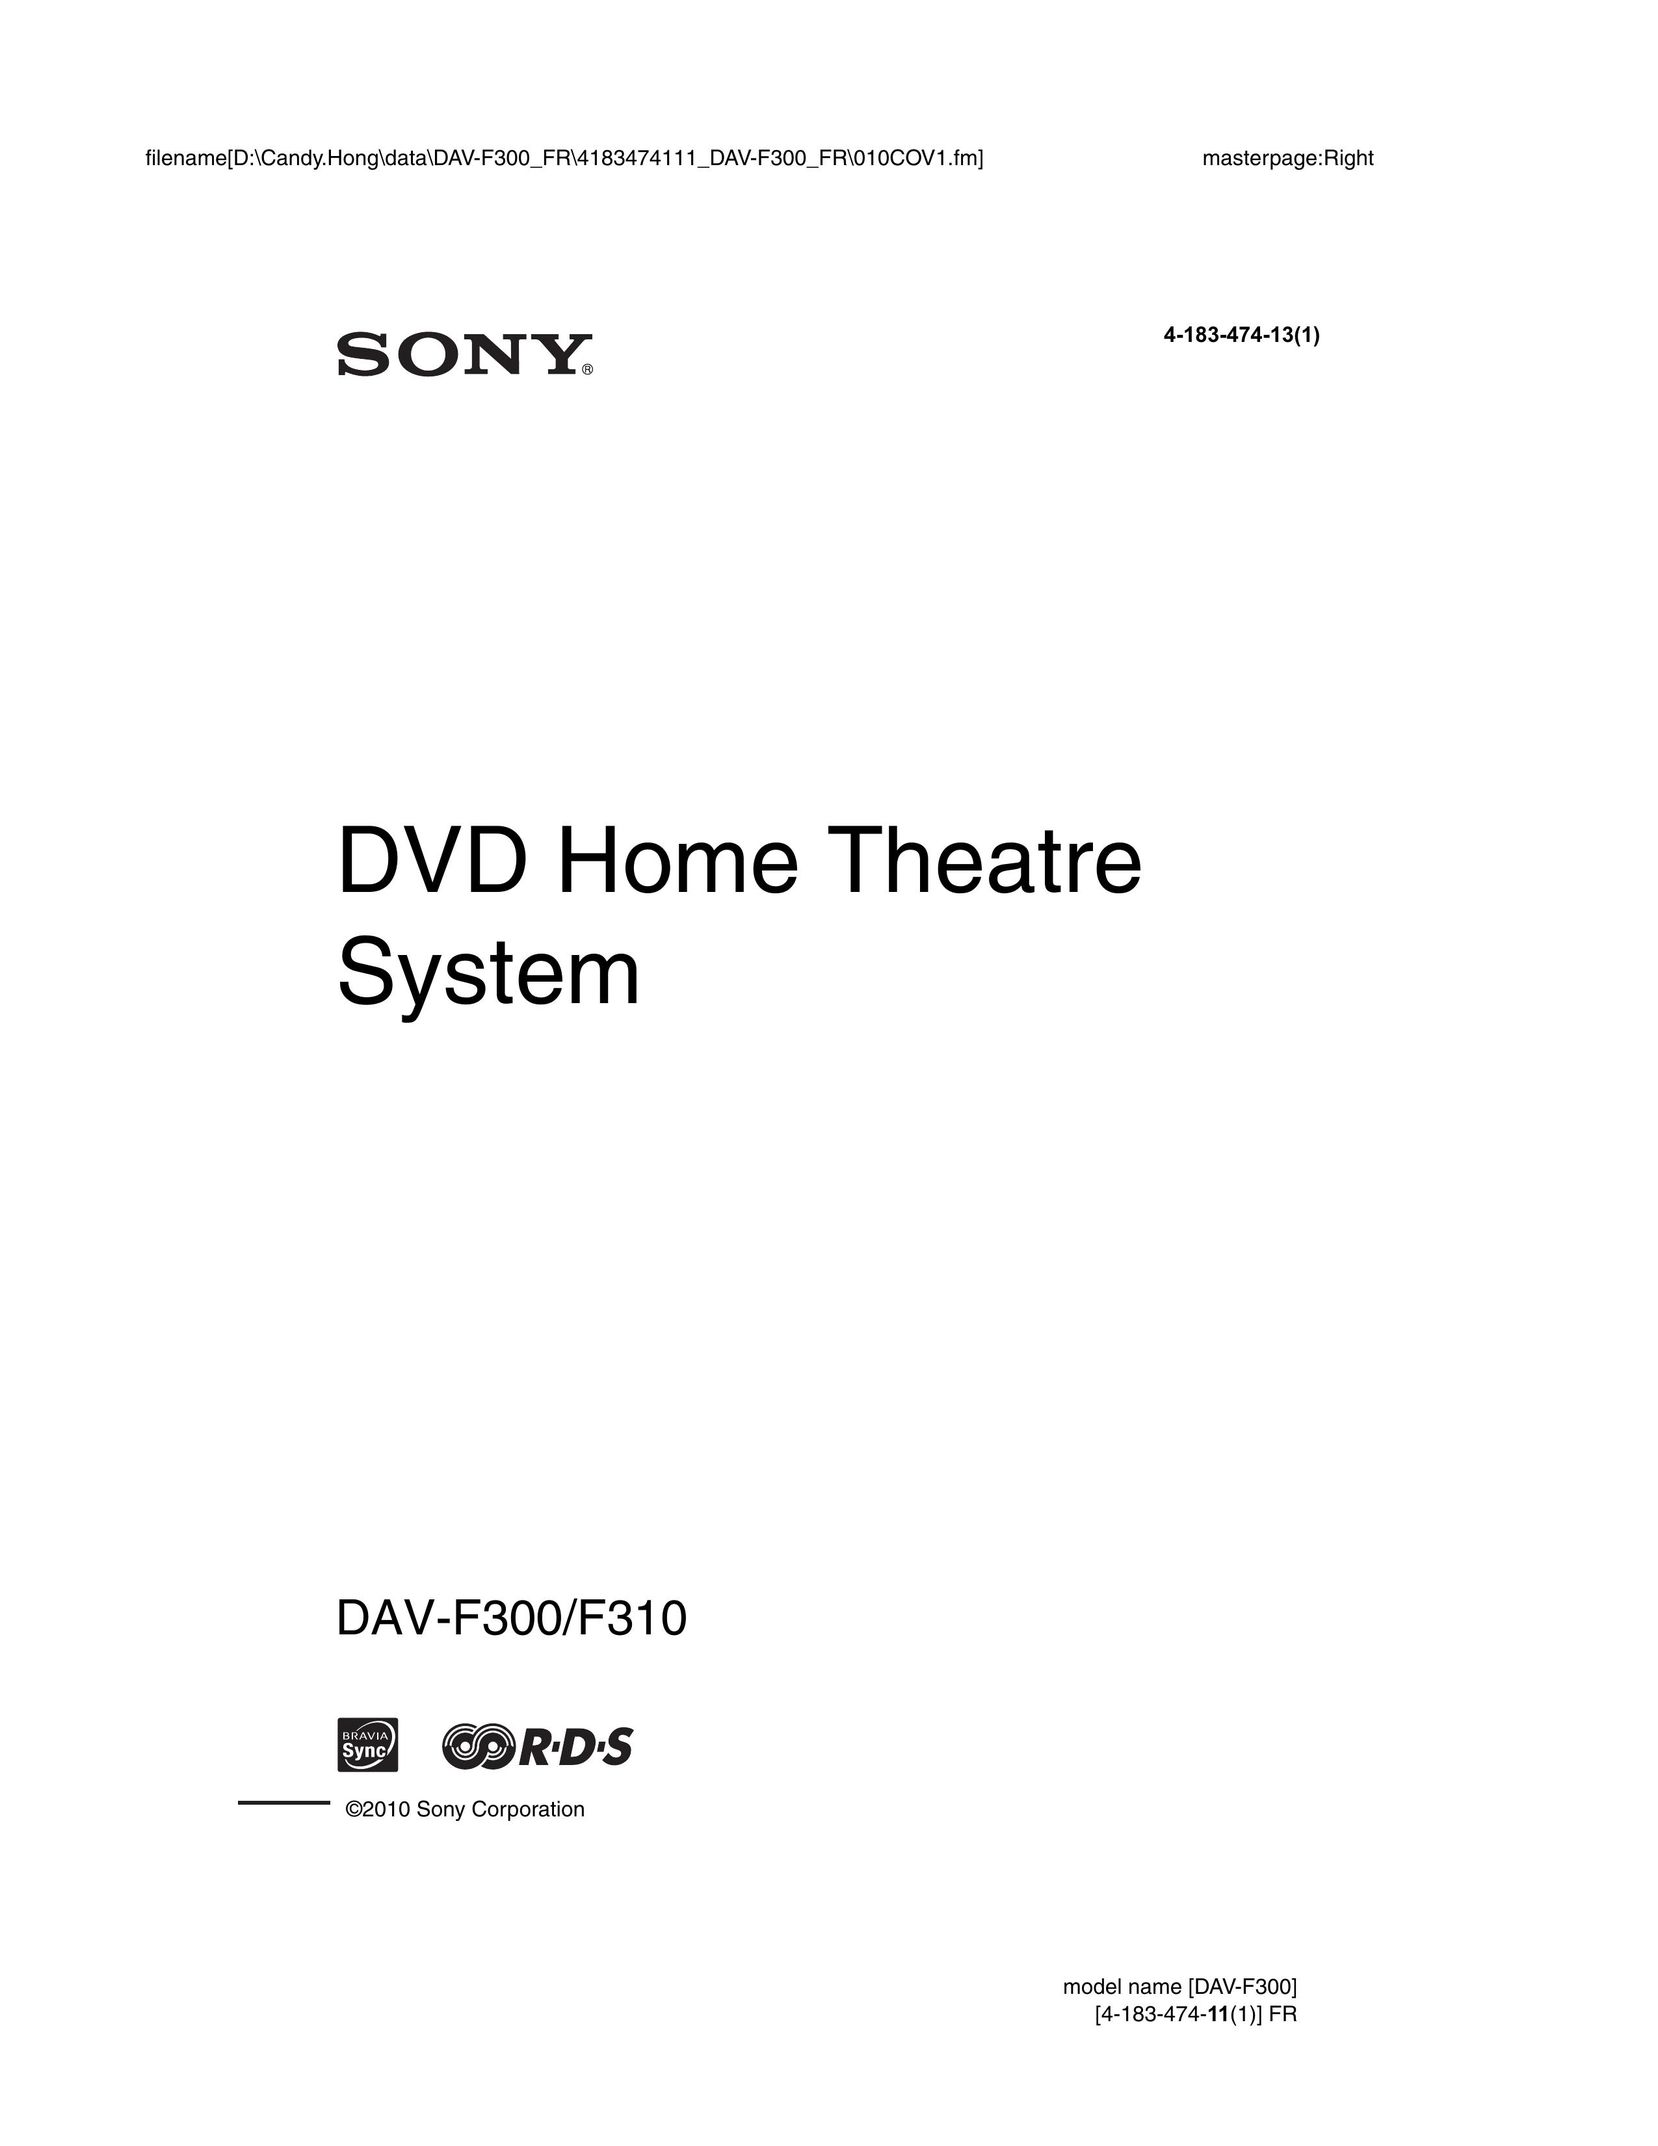 Sony DAV-F300/F310 Headphones User Manual